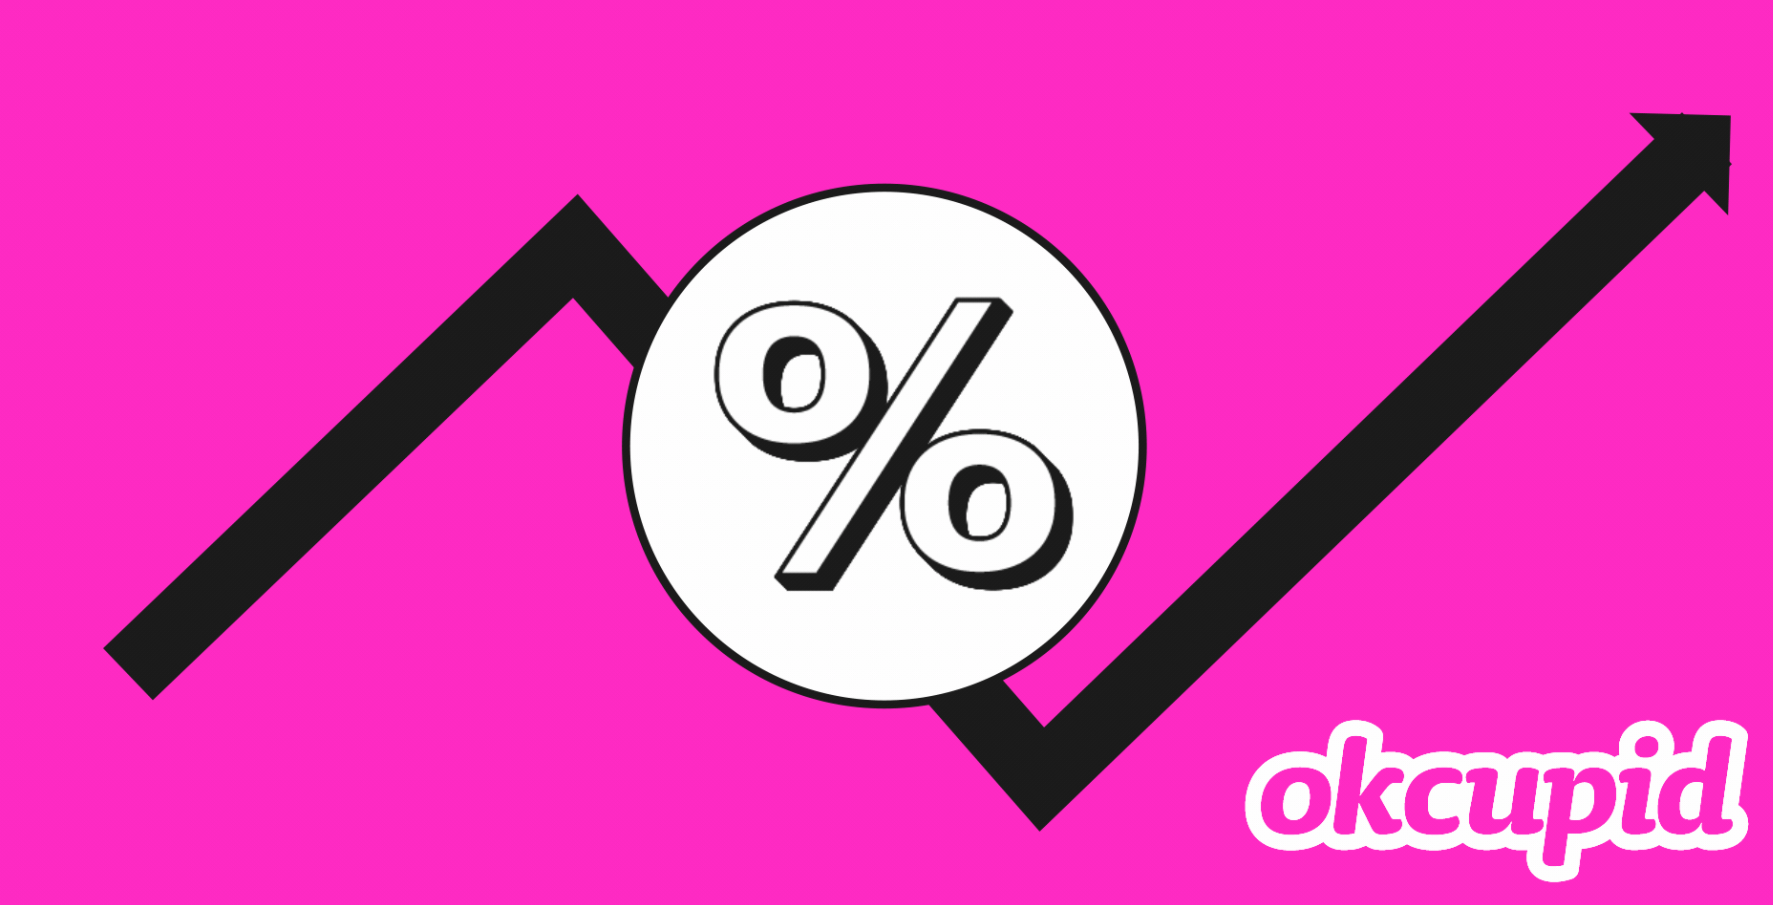 OkCupid Survey Report